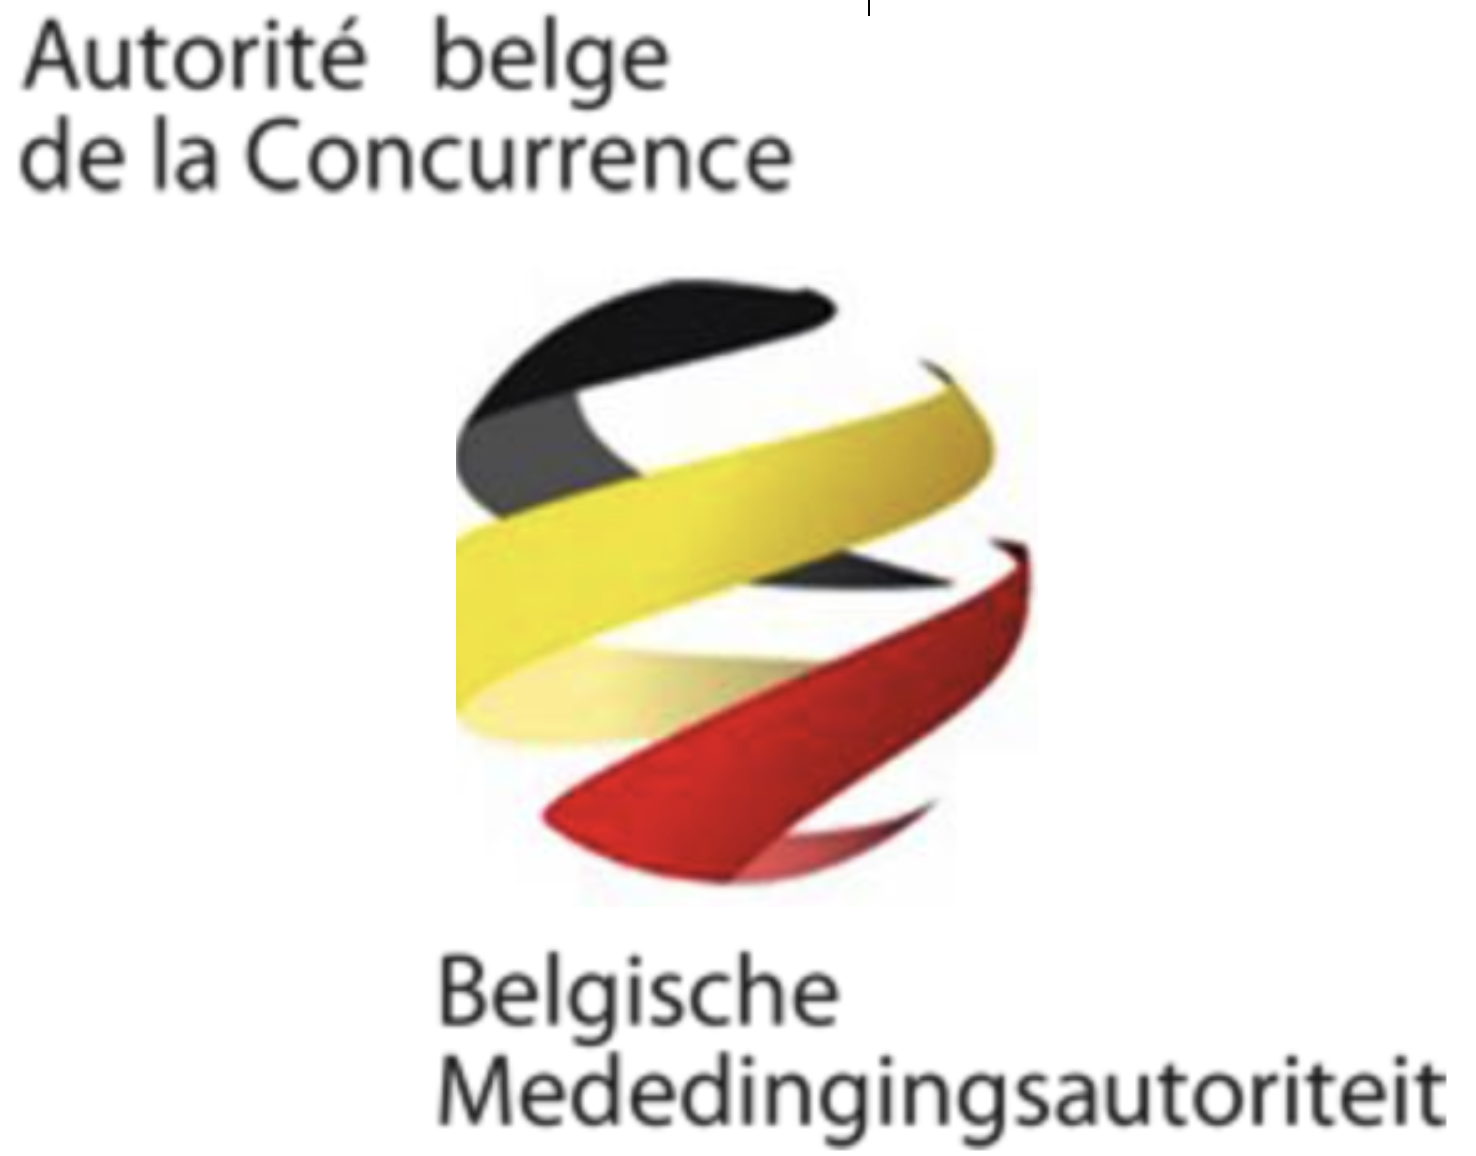 Autorité belge de la Concurrence - Belgische Mededingingsautoriteit logo